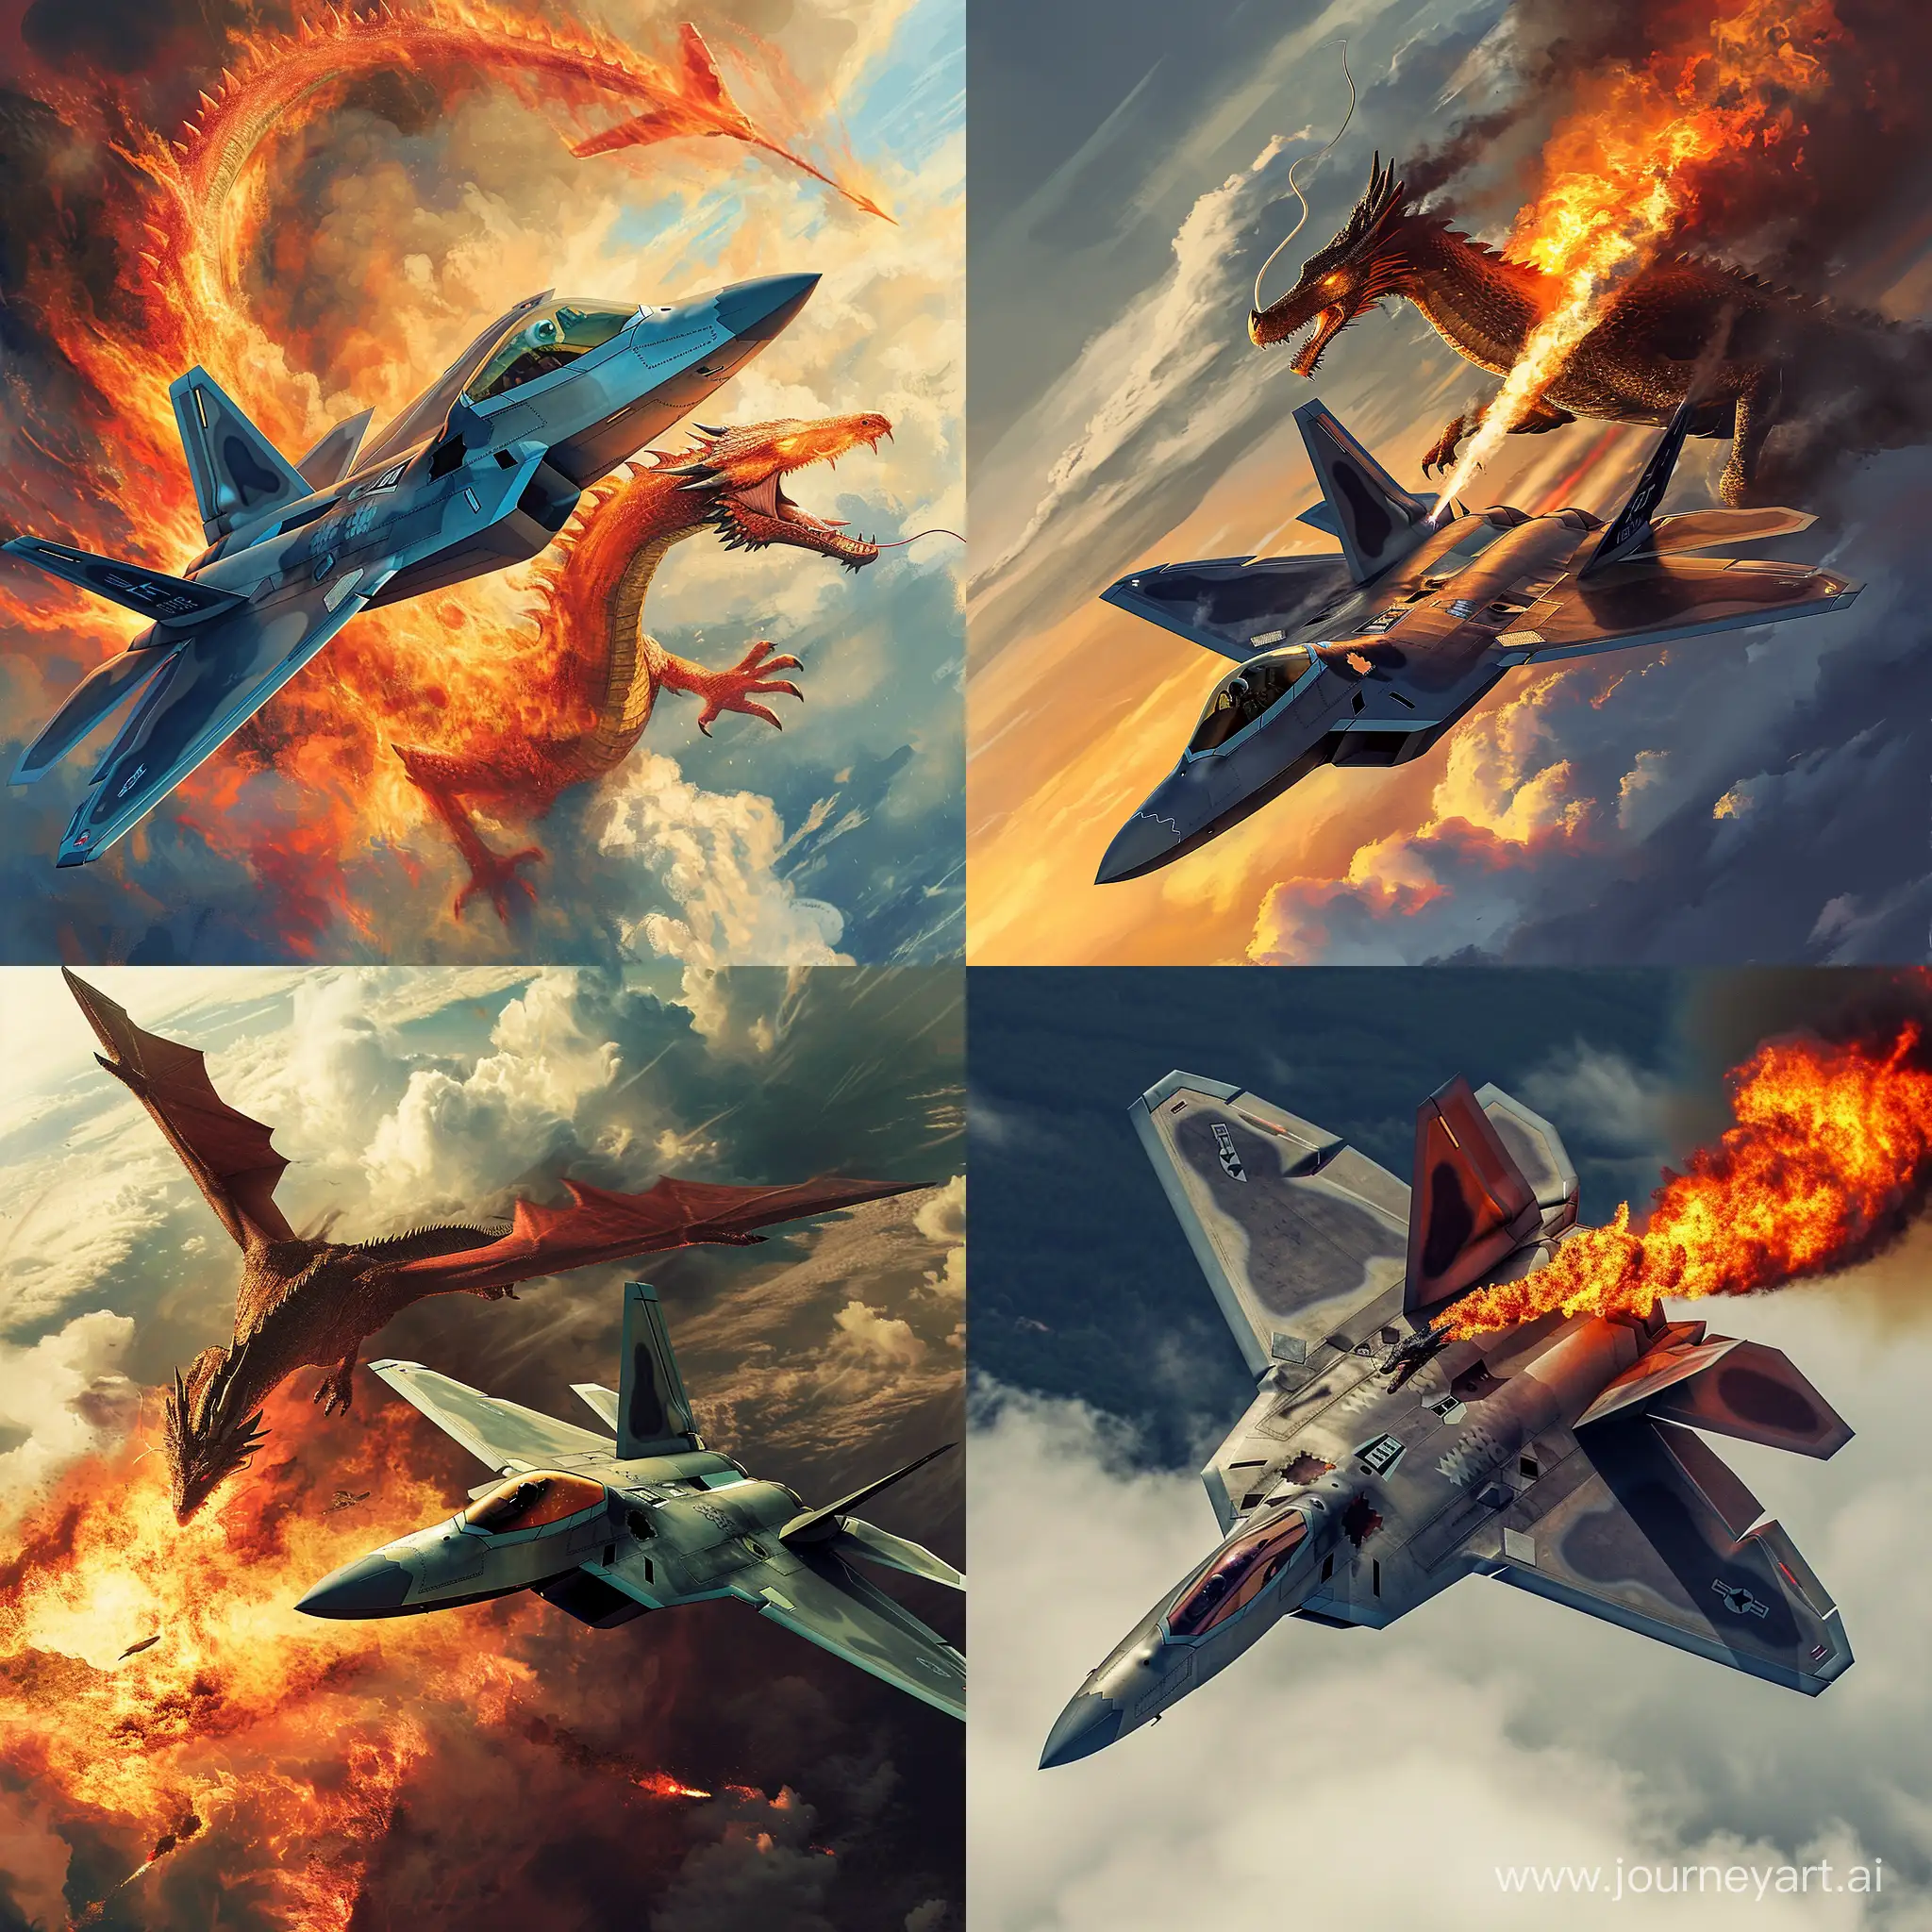 Fighter jet f22 raptor vs fire dragon